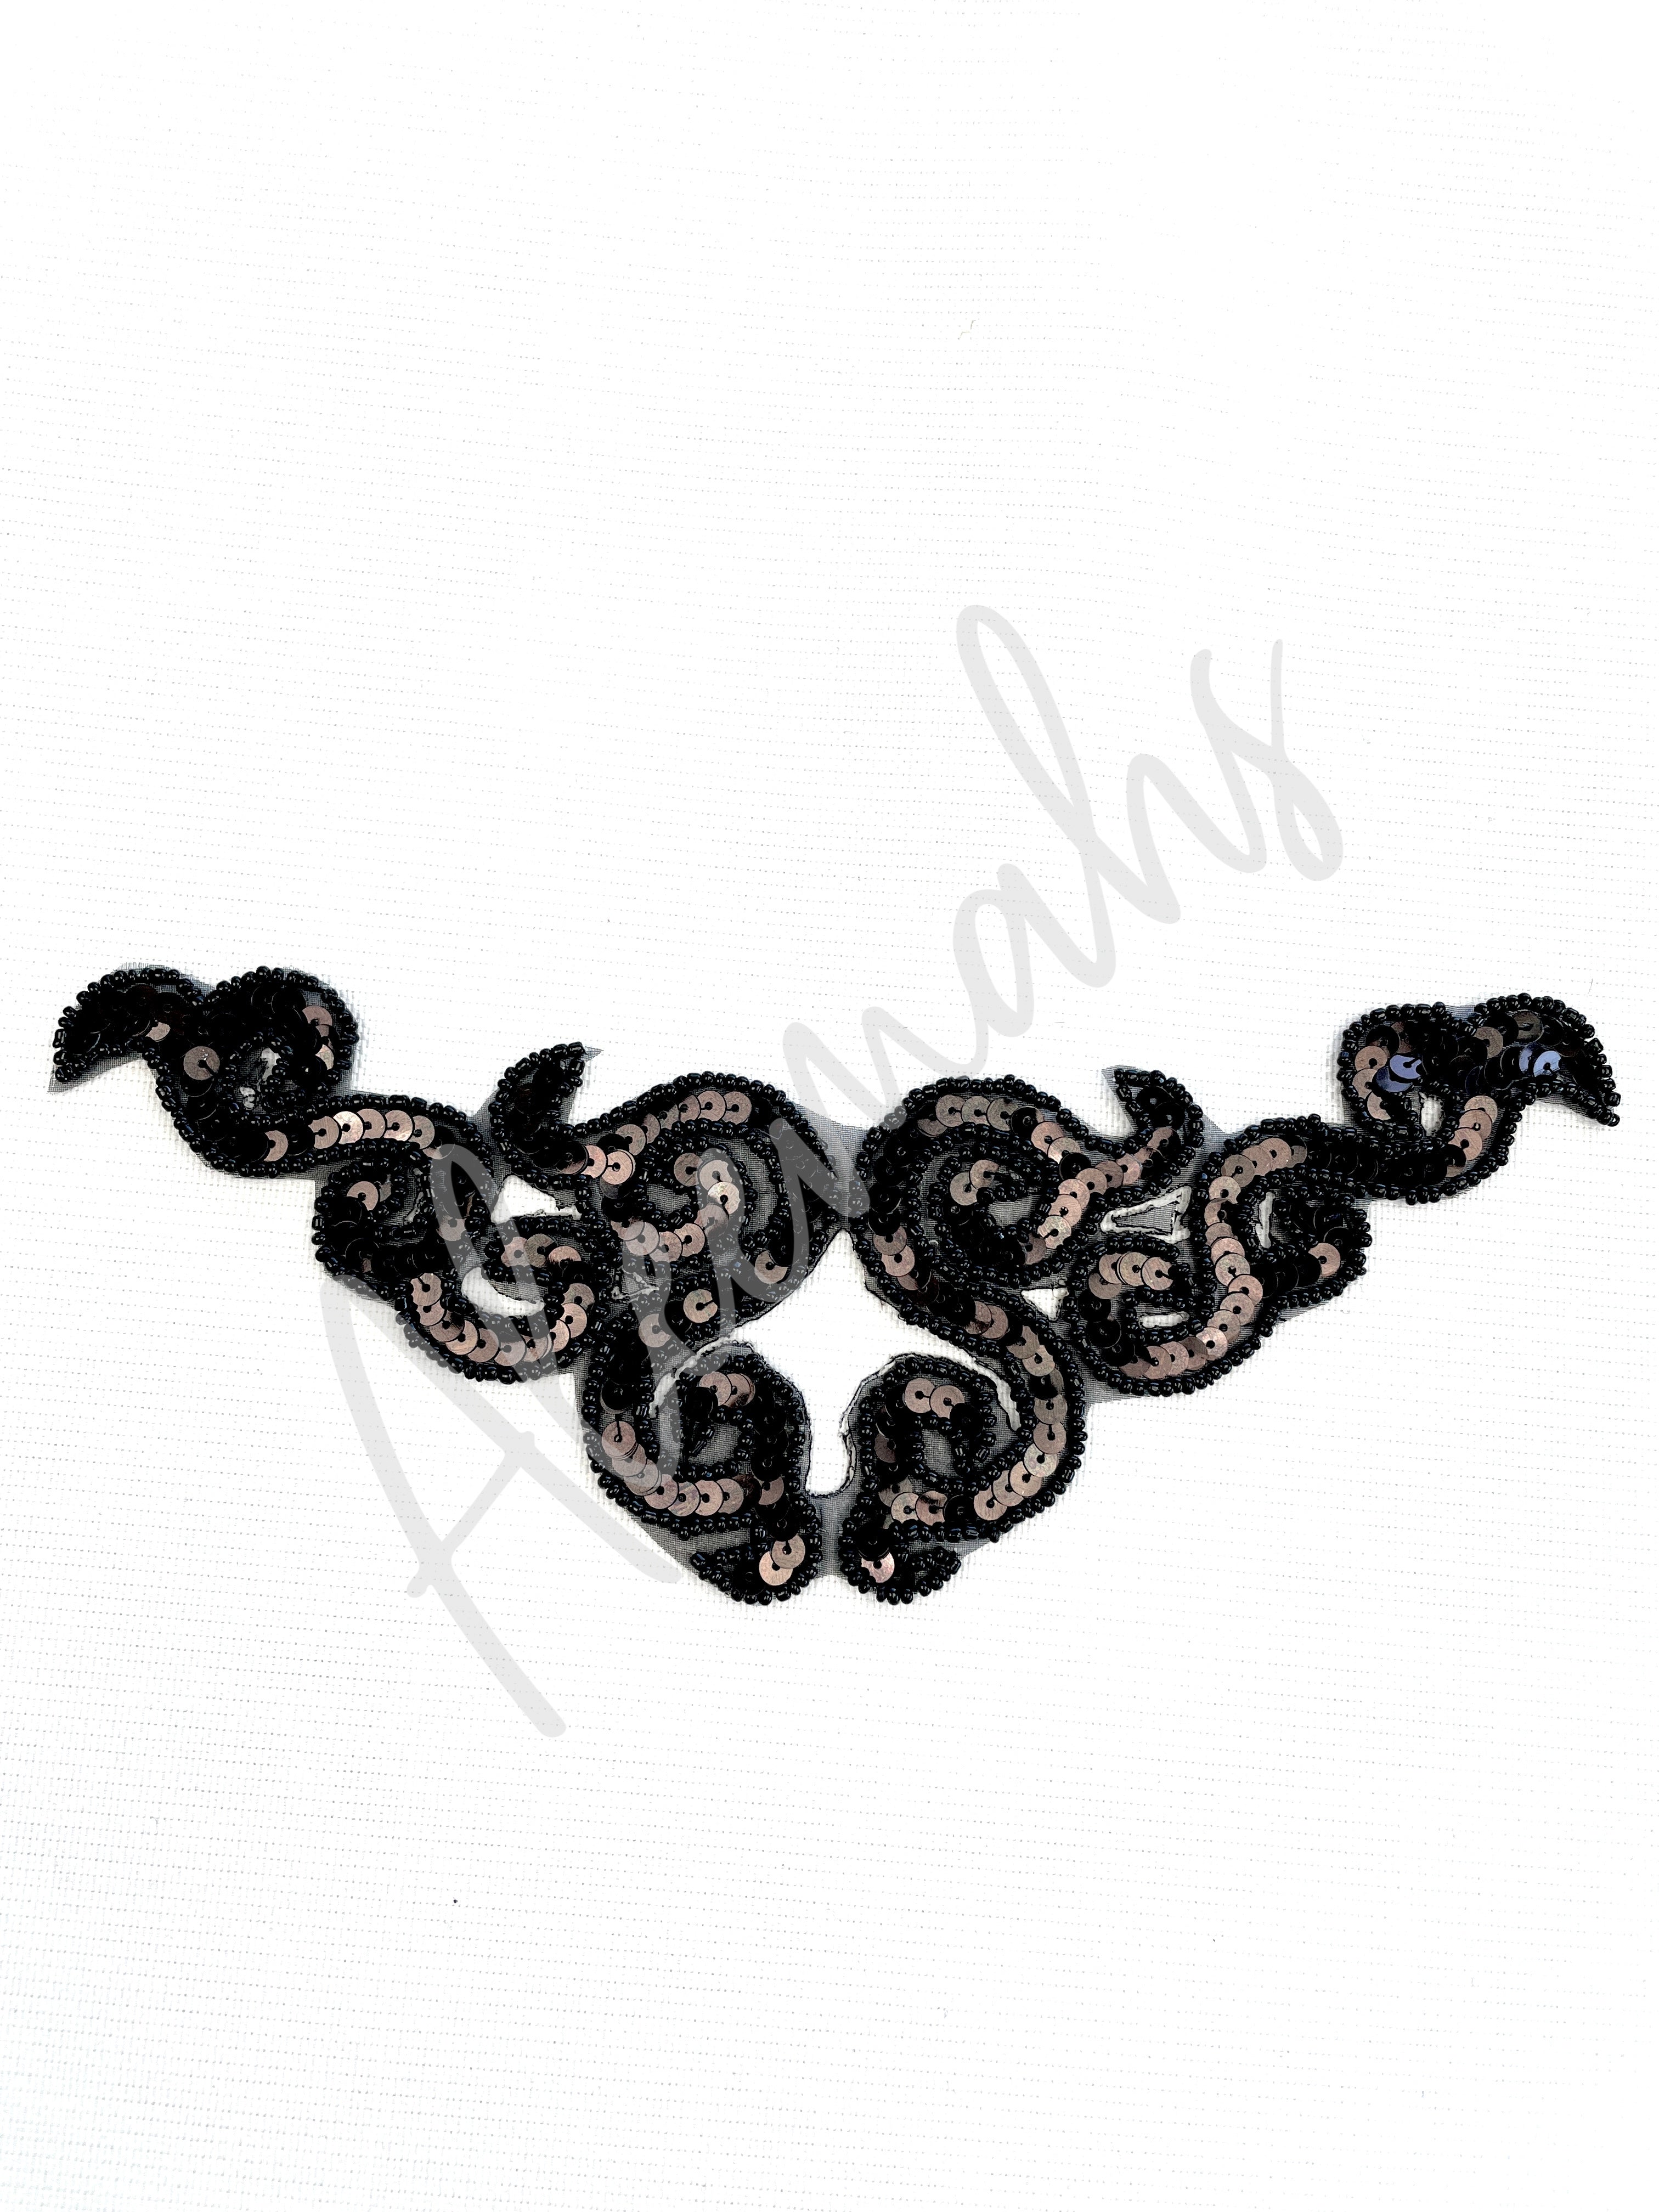 A-107: Dark Chocolate sequin and black bead applique